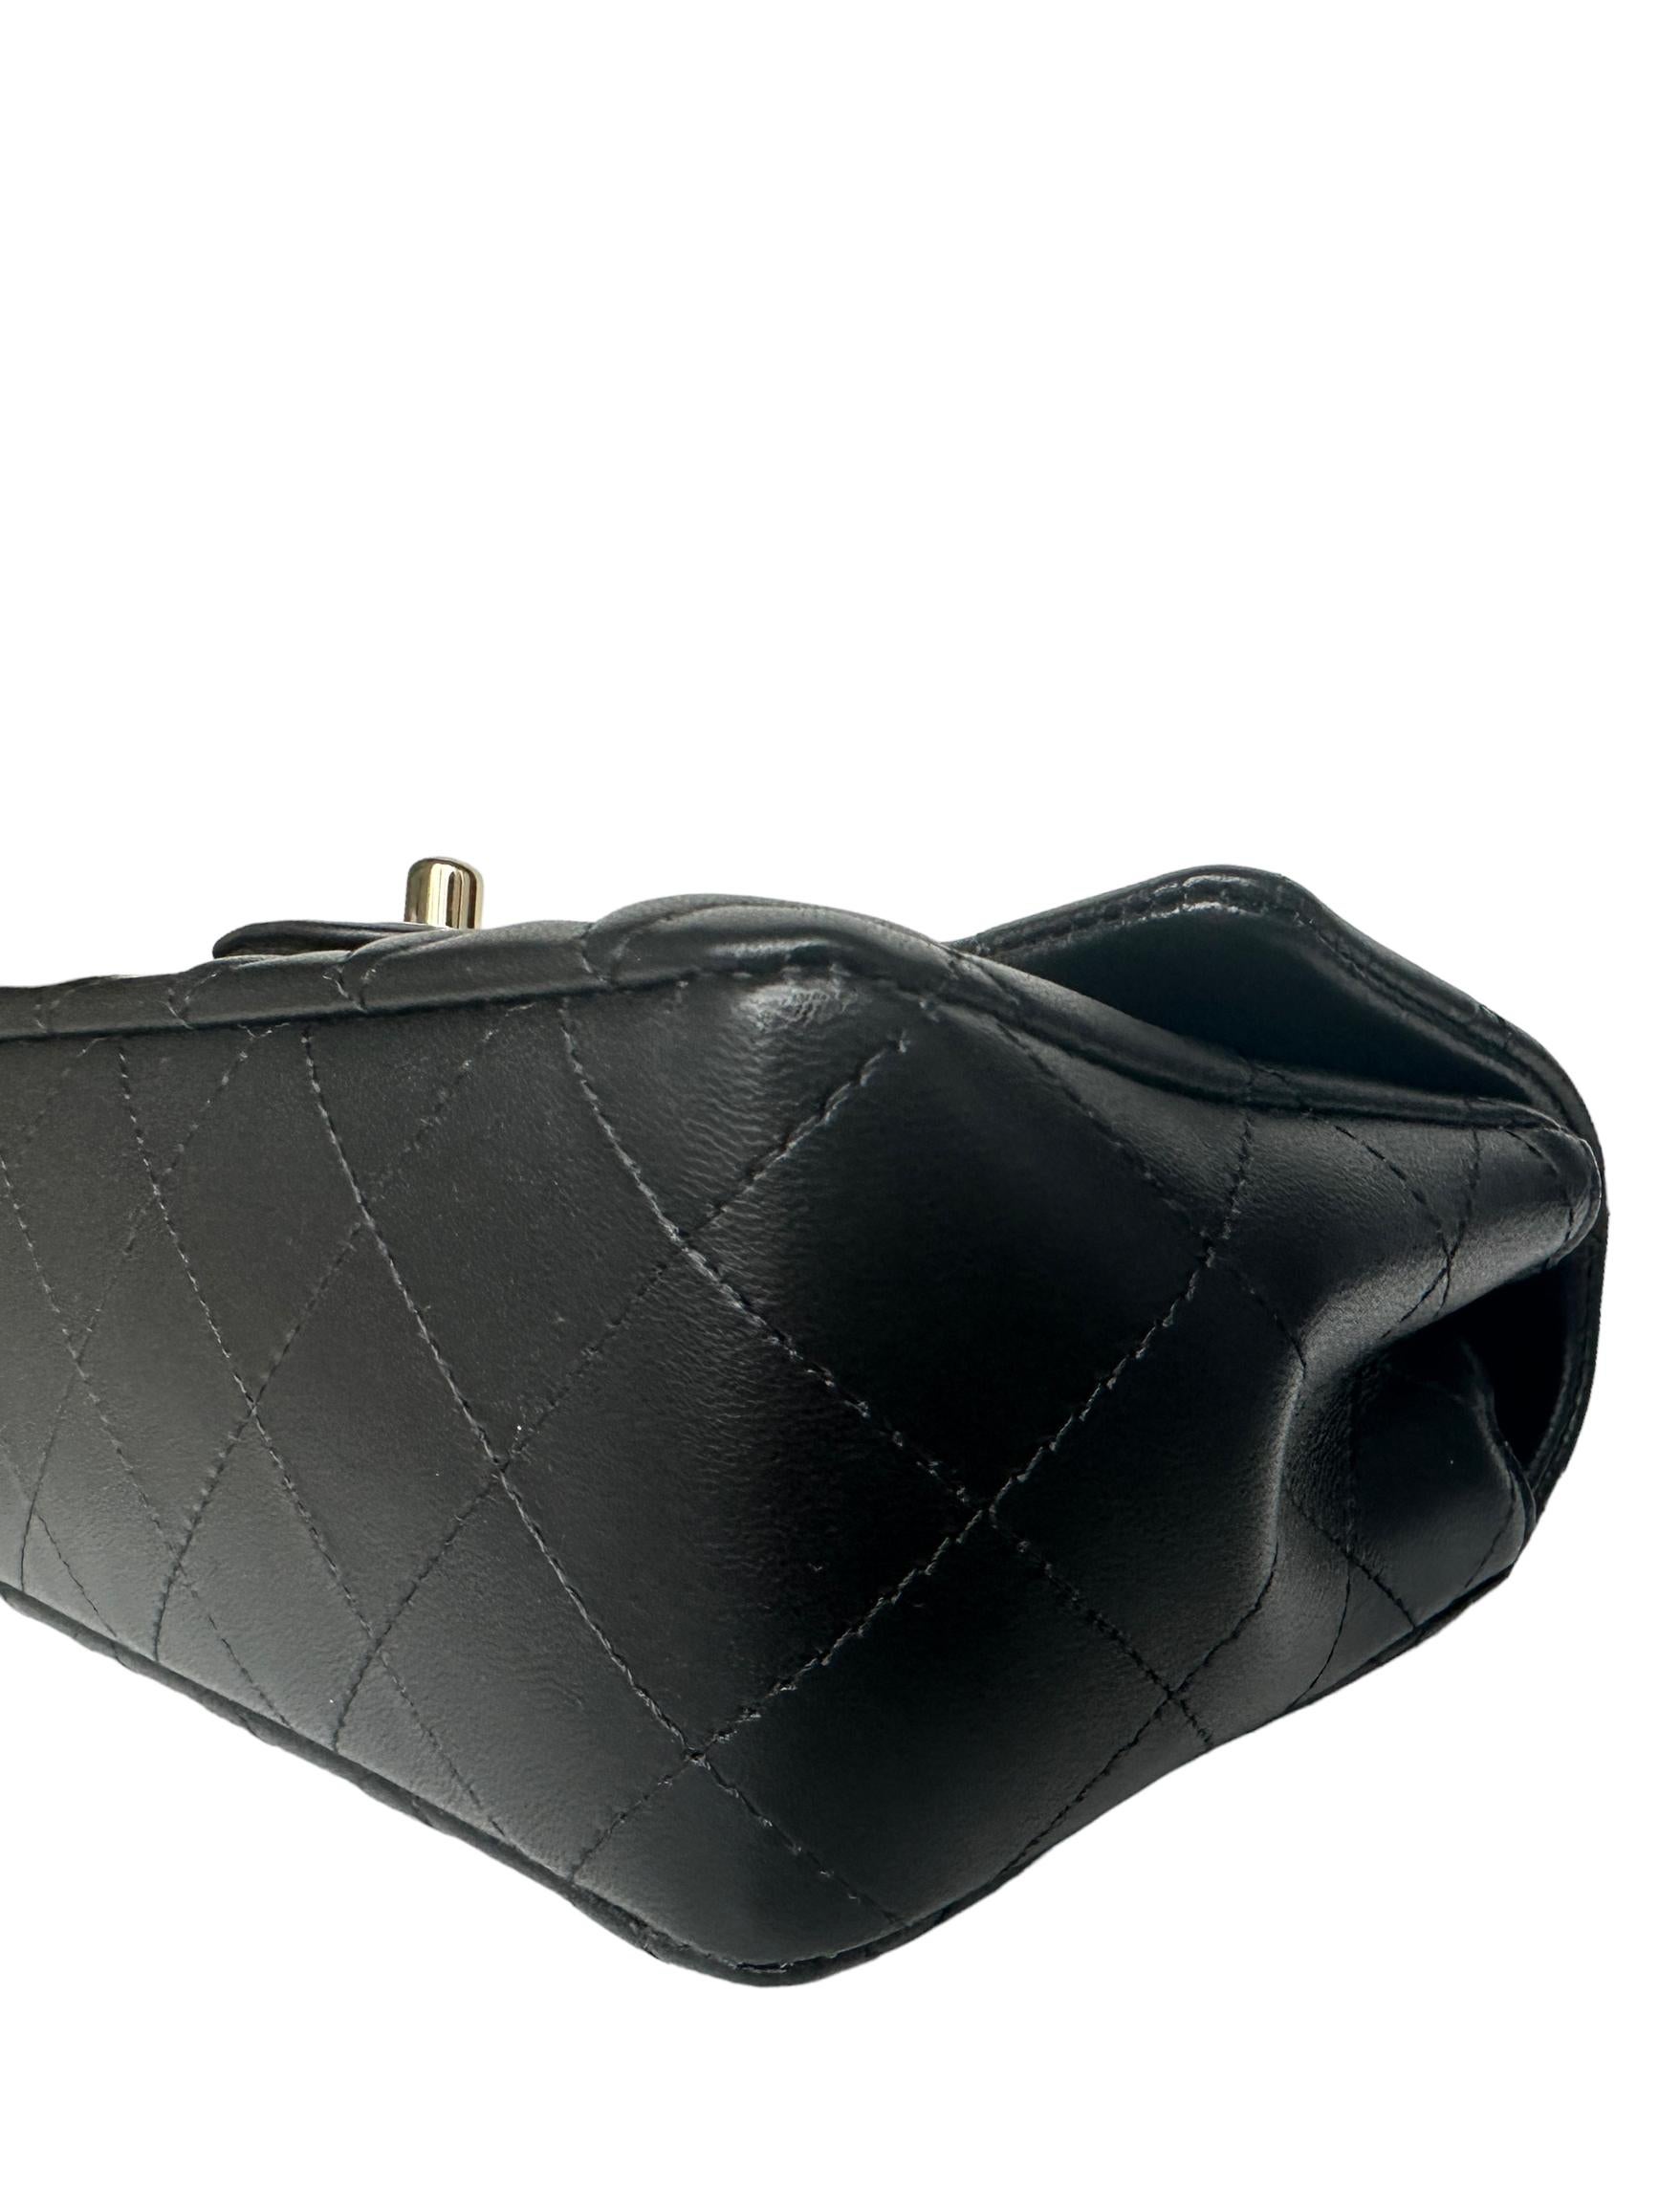 Chanel Black Lambskin Quilted Rectangular Mini Flap Bag 2